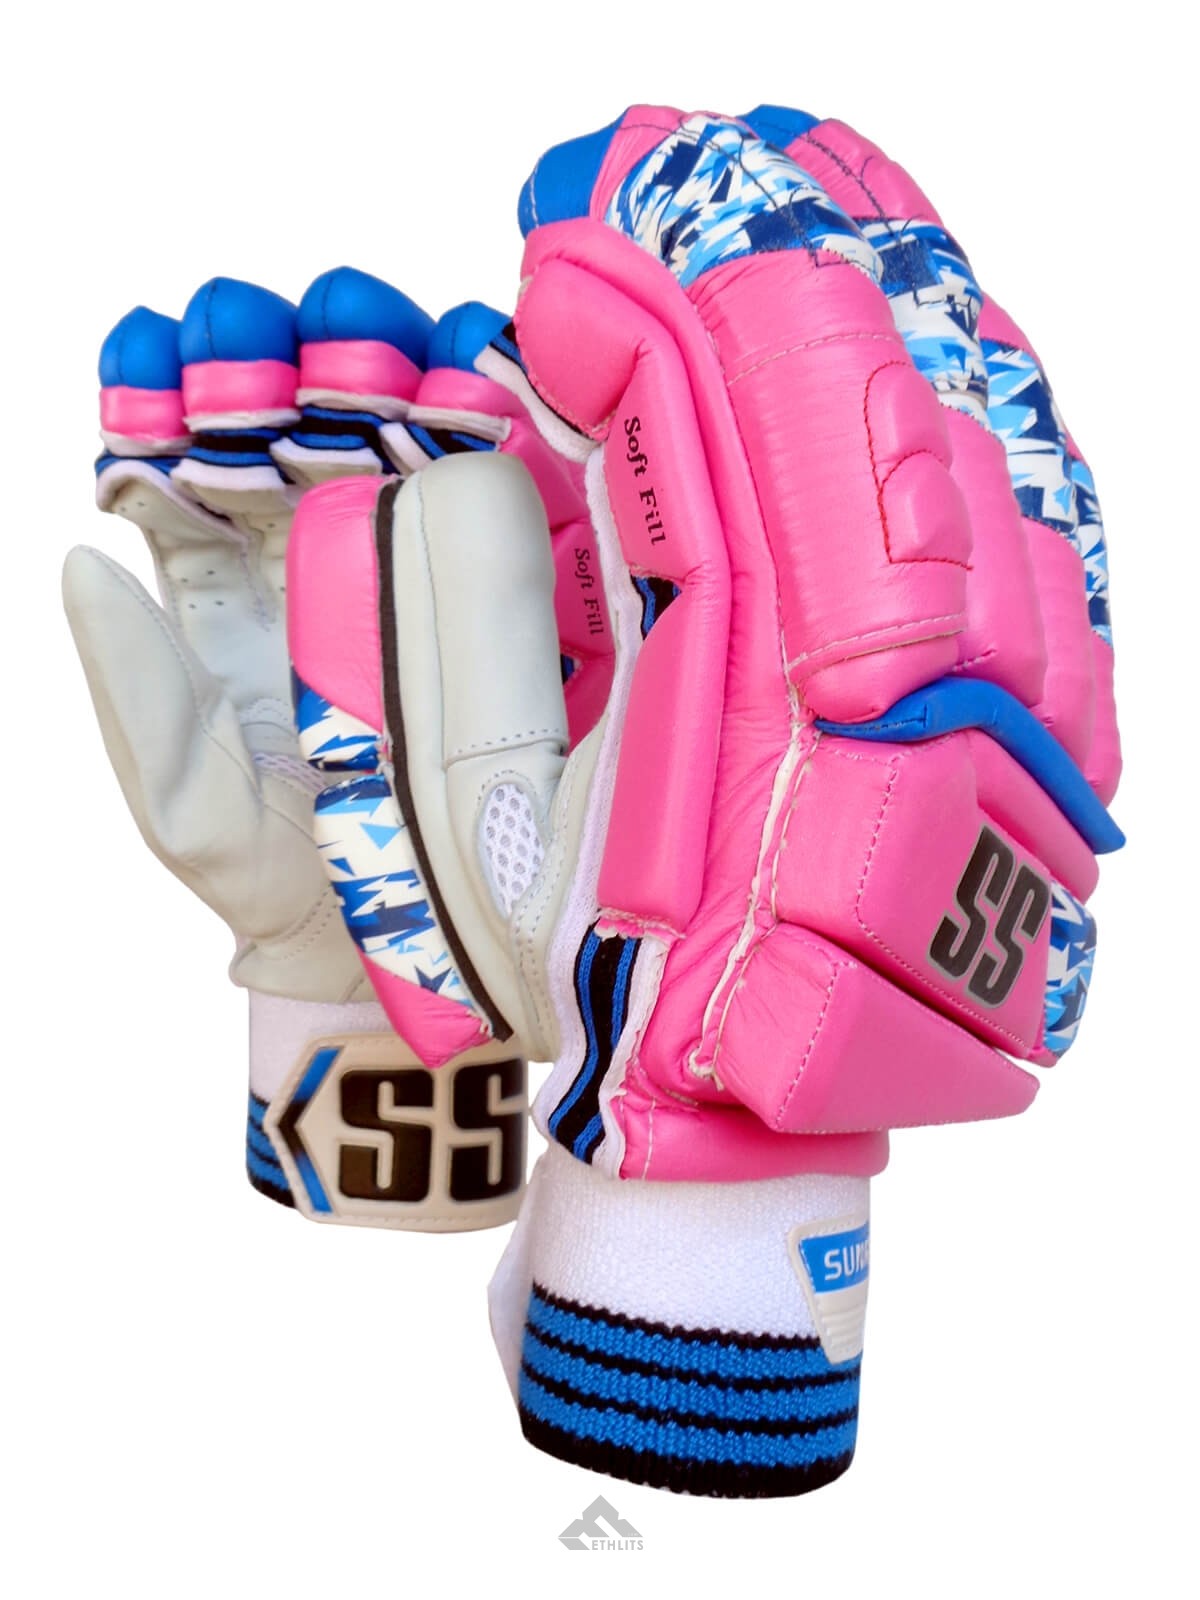 SS IPL Gloves - Rajasthan Royals Pink